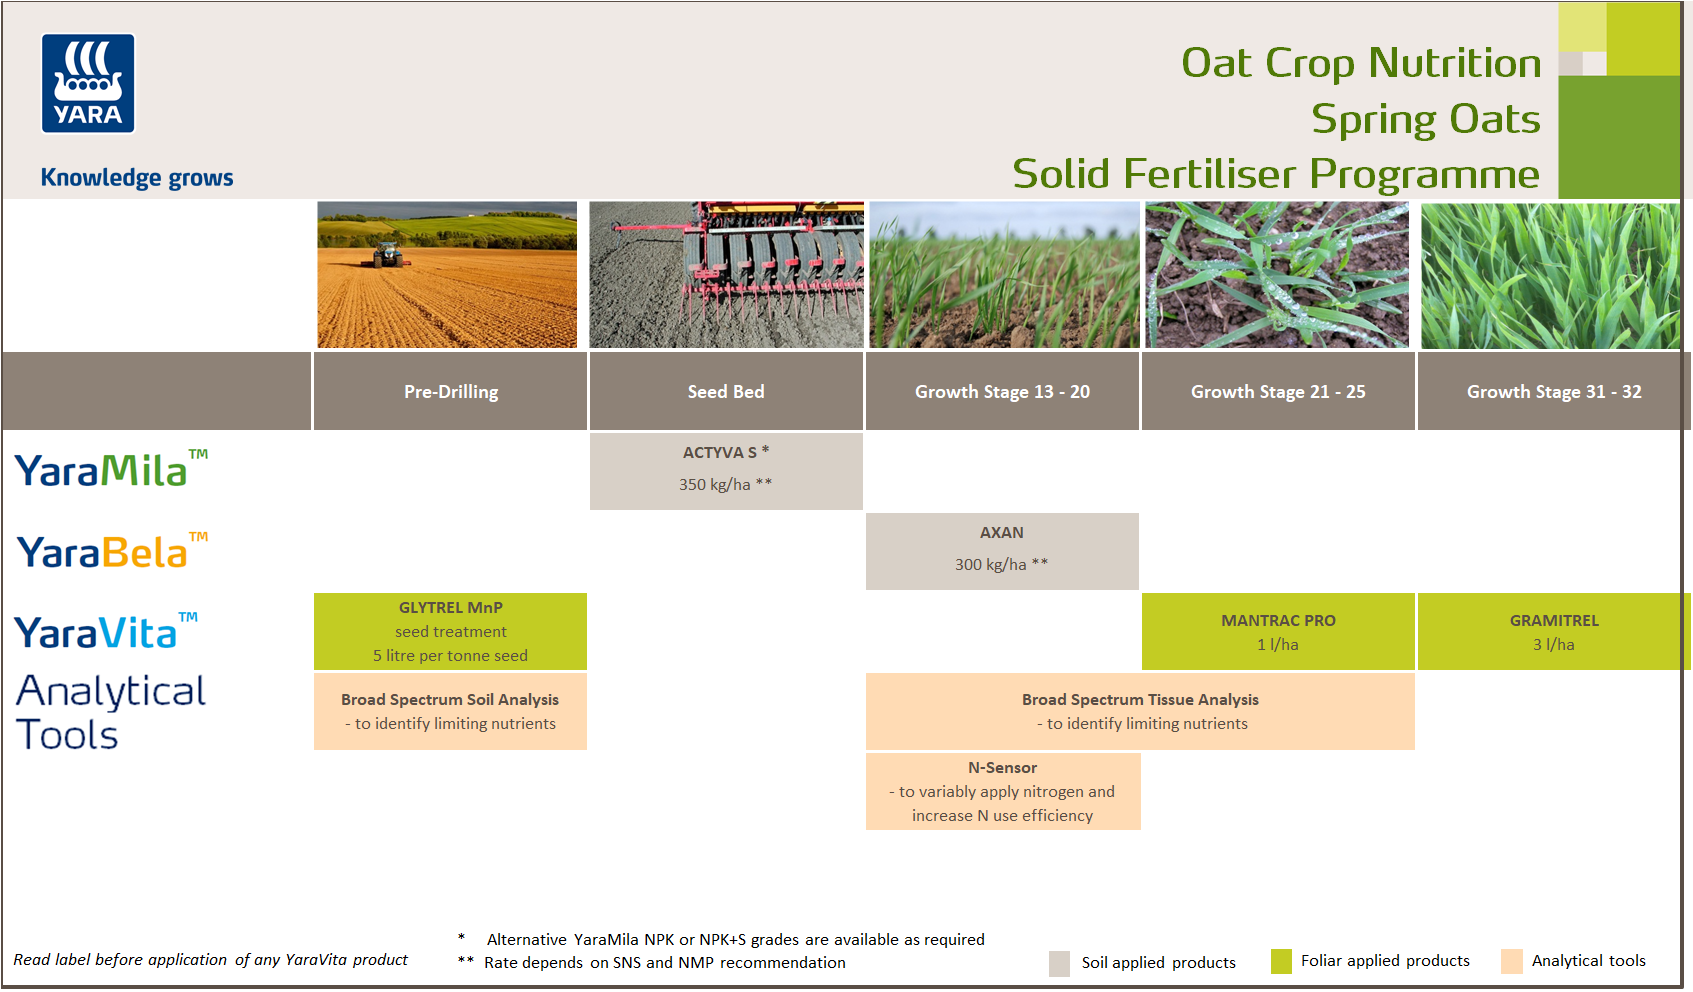 Spring oats fertiliser programmes